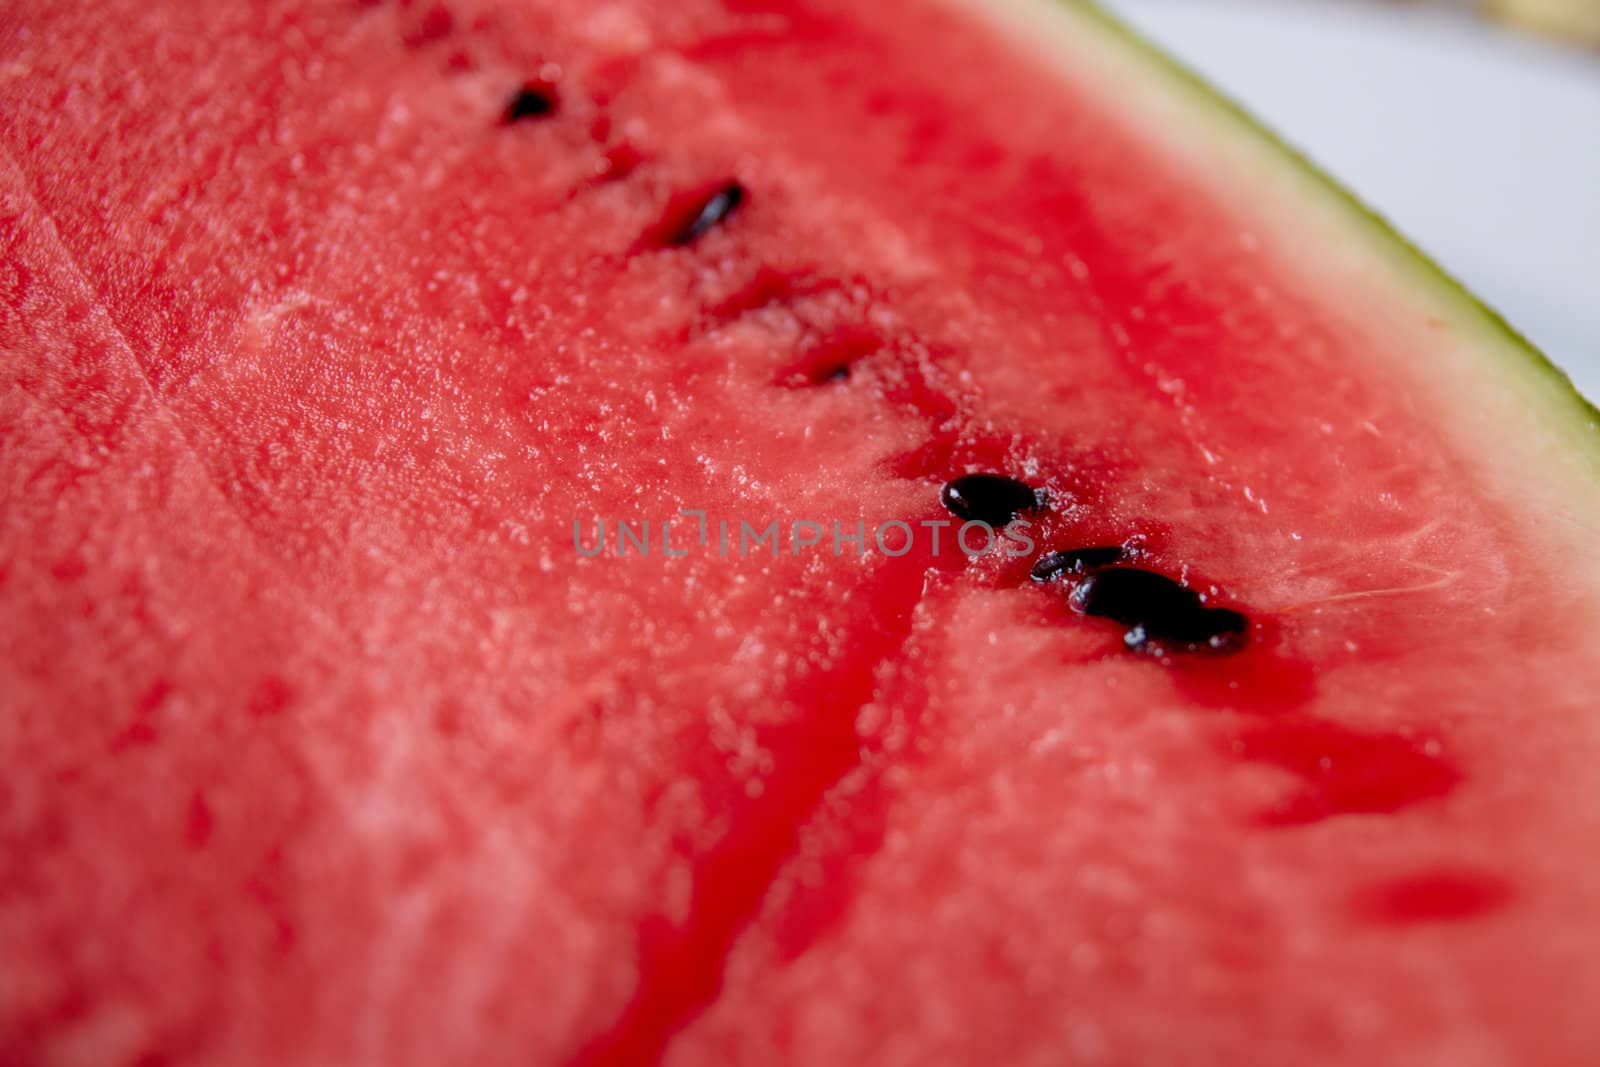 Water melon detail by Nikonas